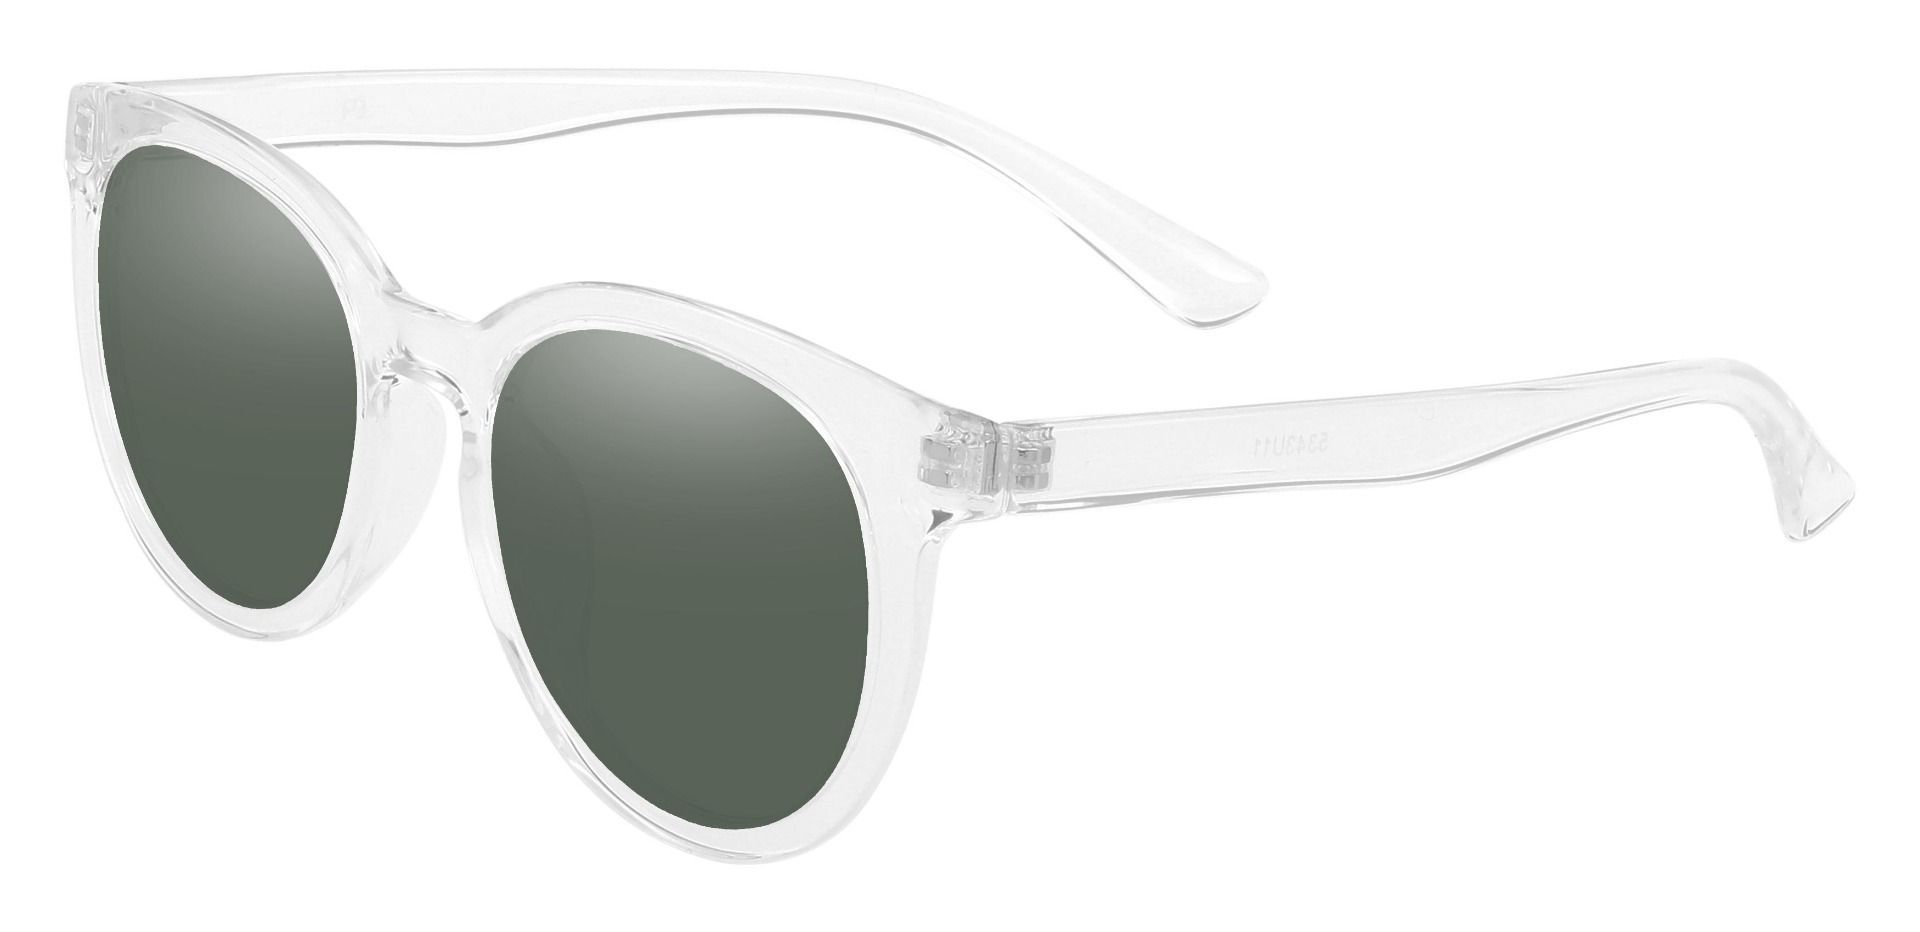 Newberry Round Prescription Sunglasses - Blue Frame With Green Lenses